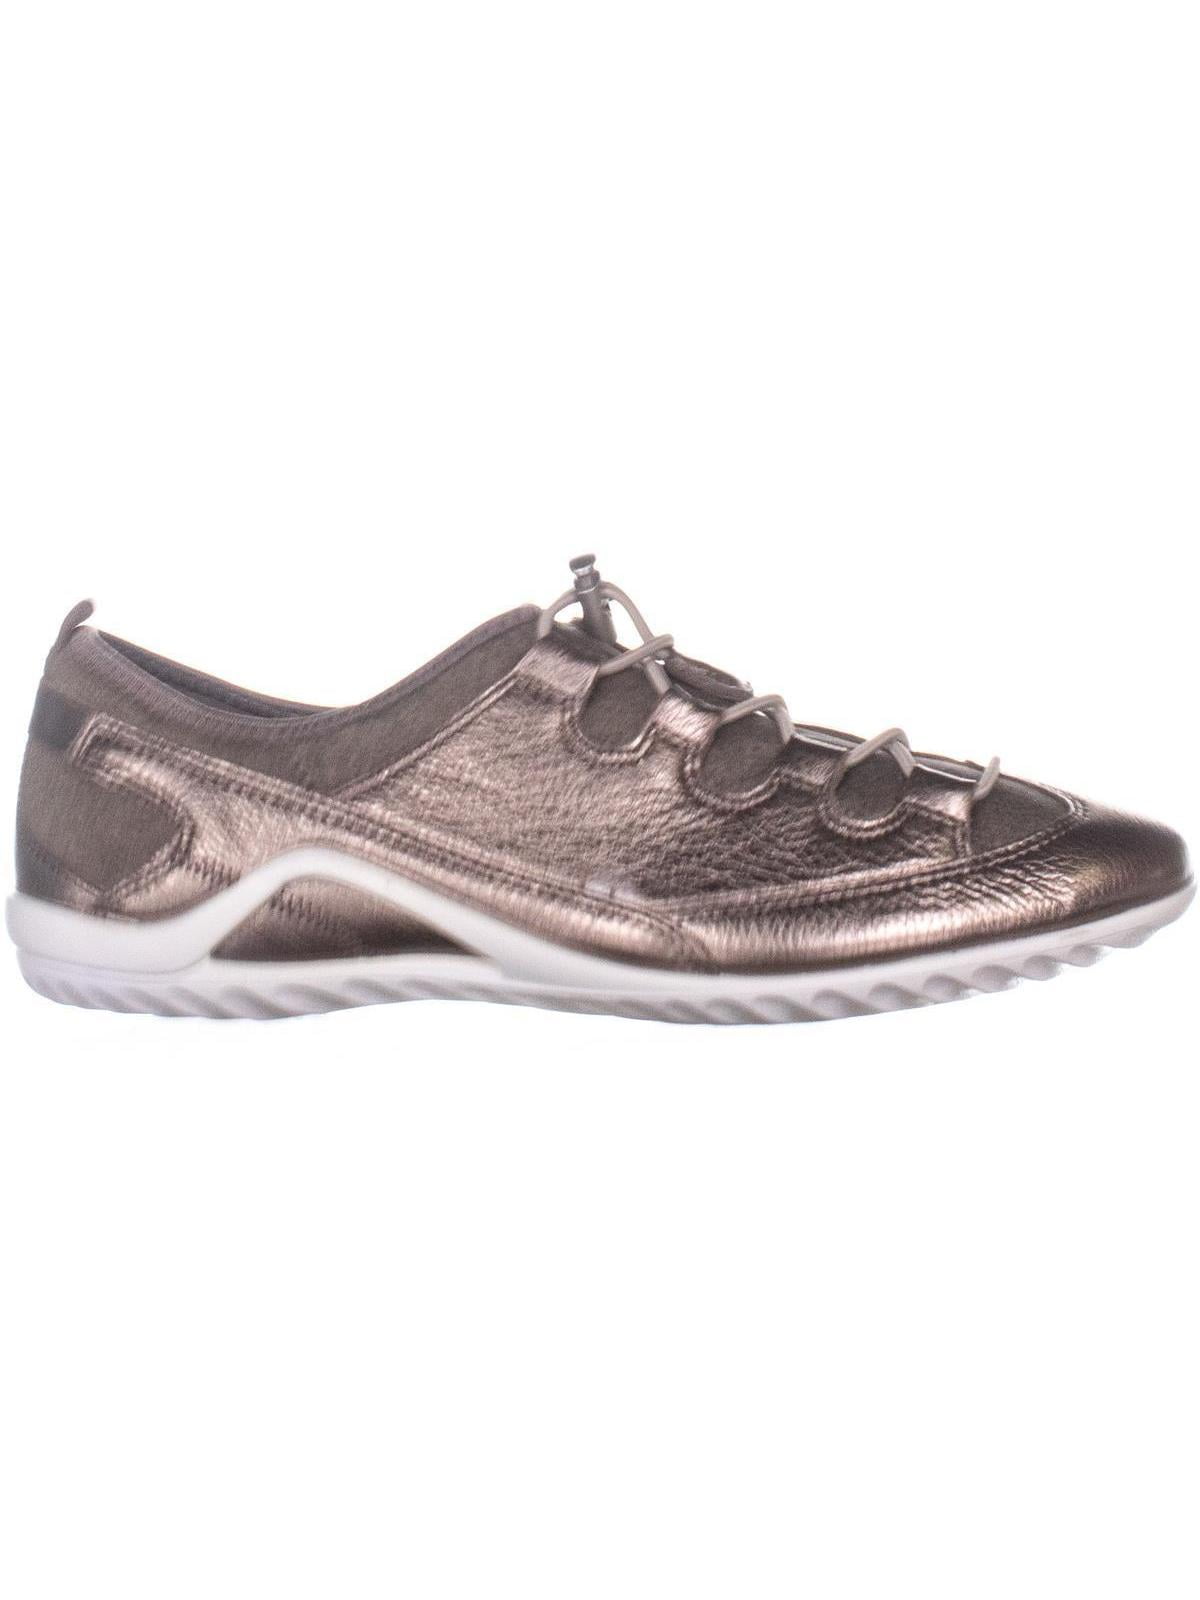 Womens ECCO Vibration II Togel Sneakers, Stone Metallic, 8 / 39 EU - Walmart.com